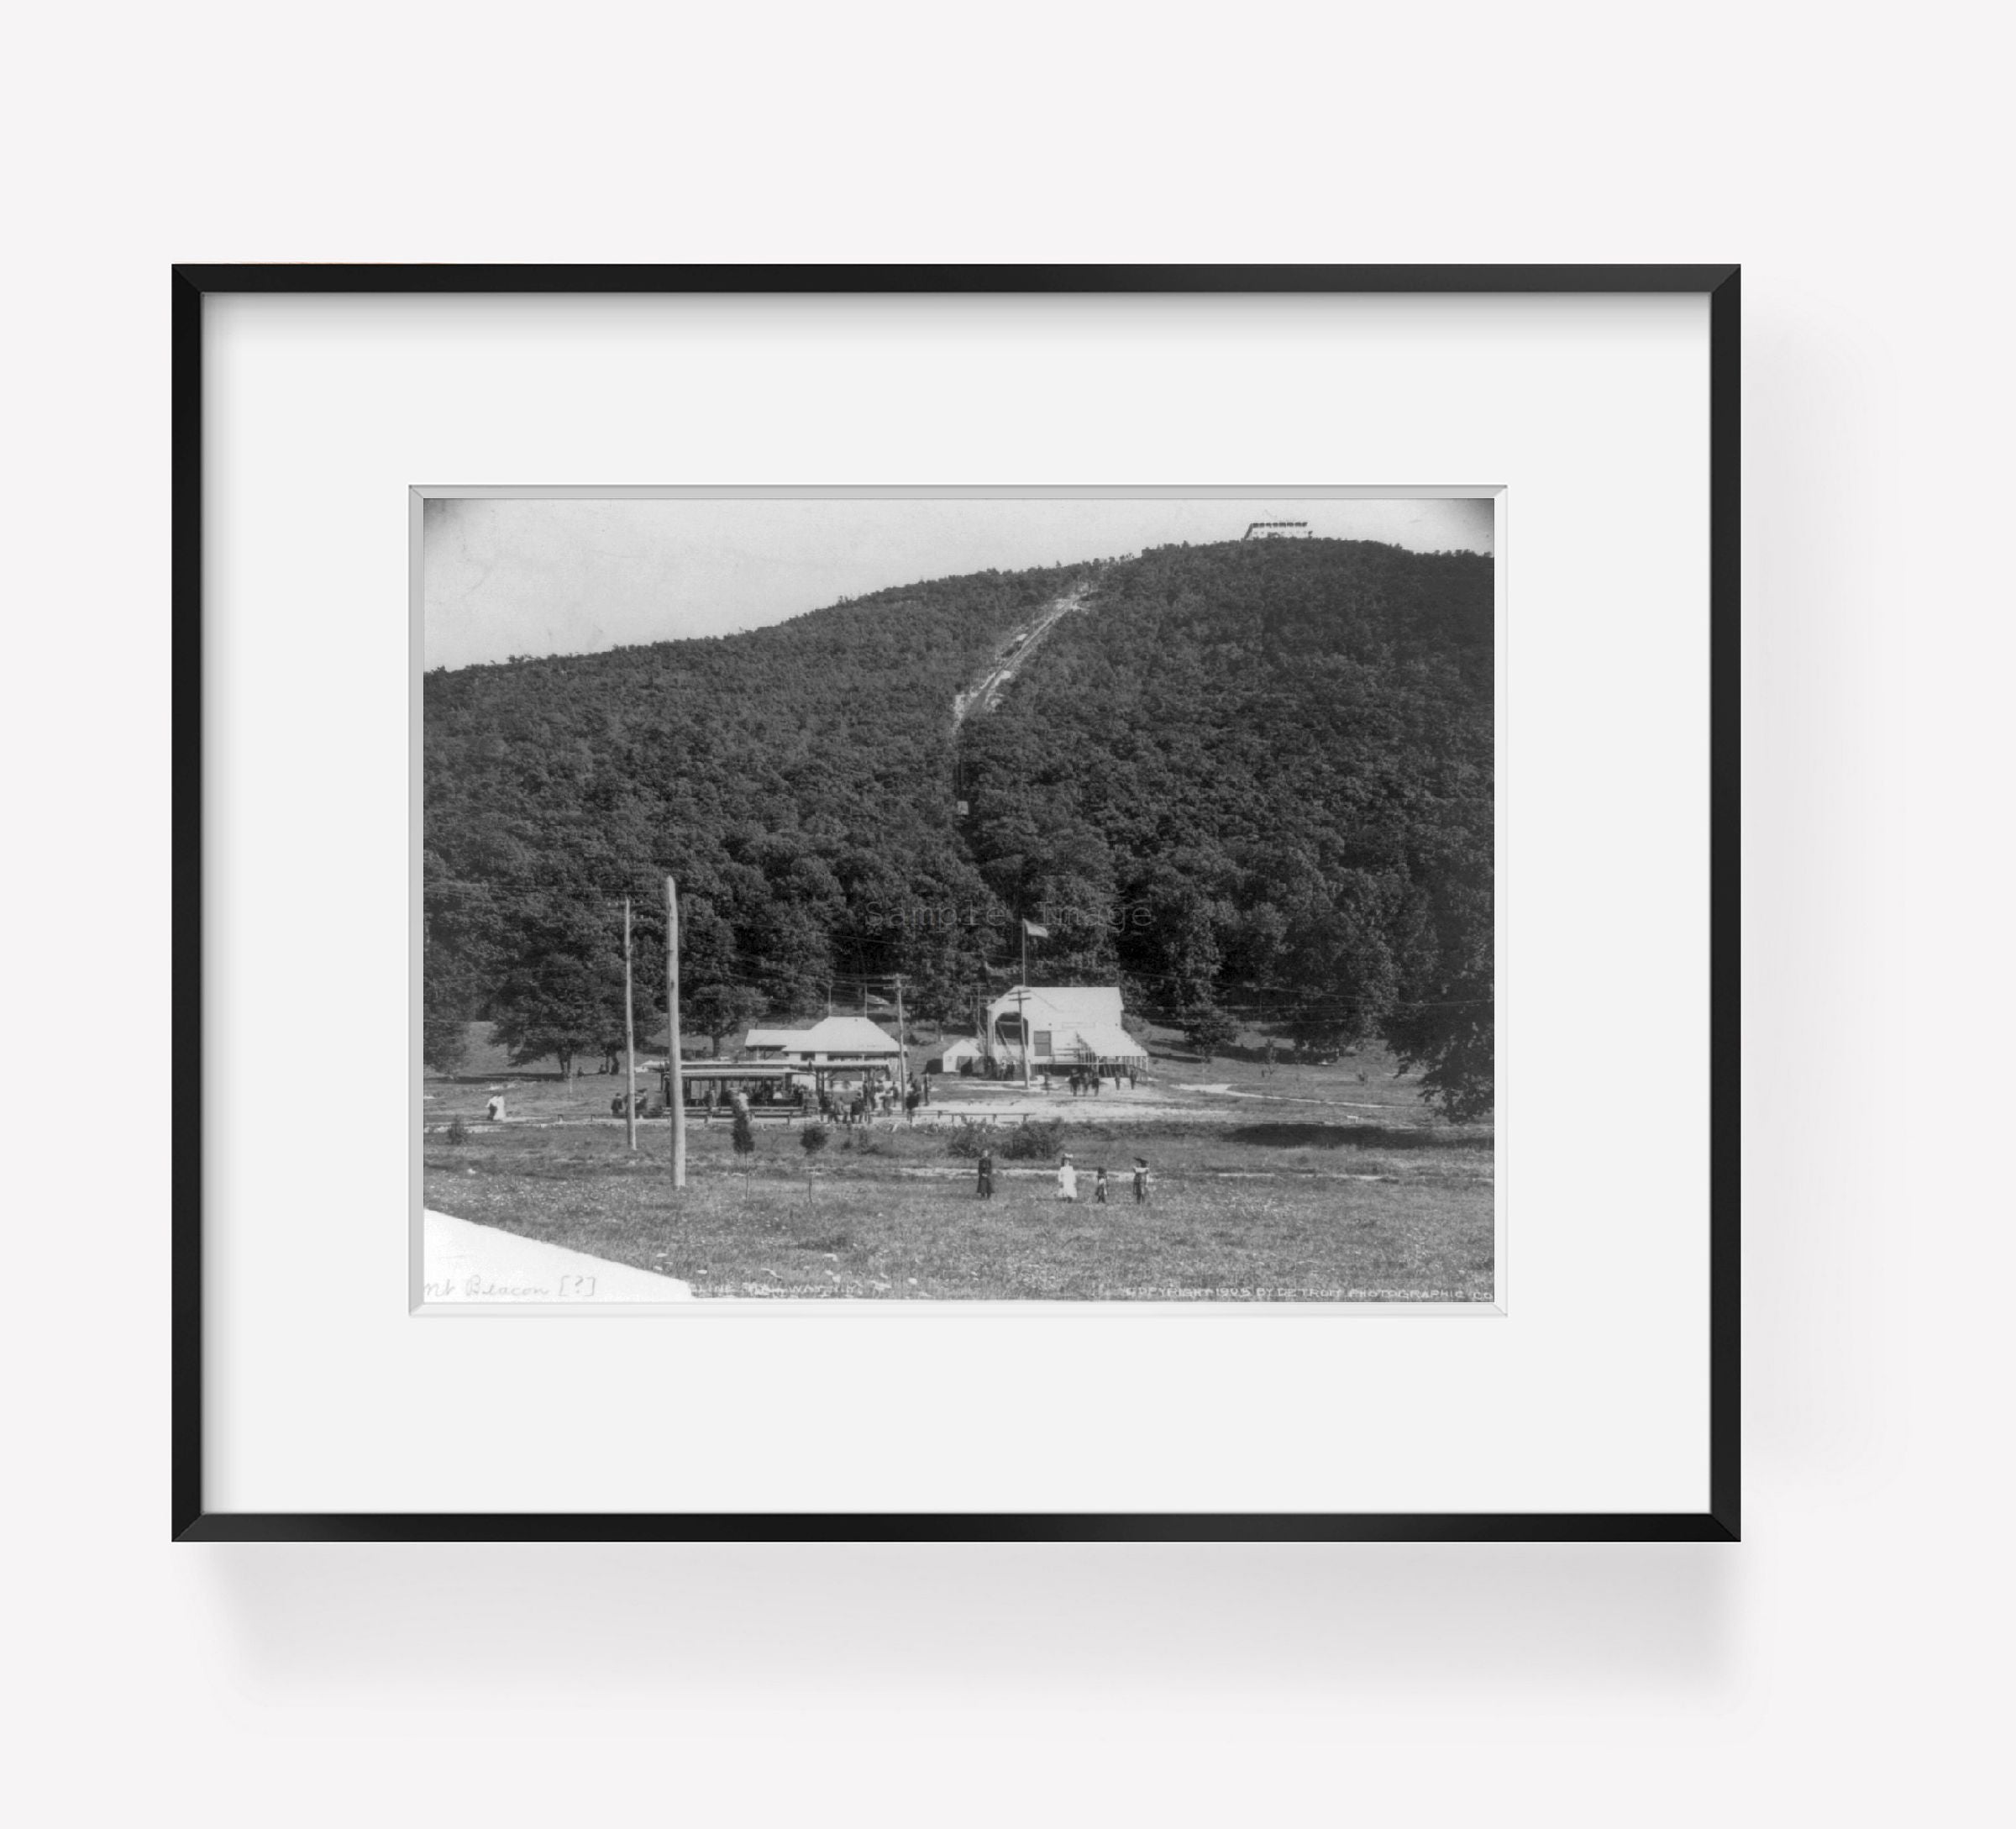 Photo: Mt Beacon?, incline railway, New York, NY, c1903, Children